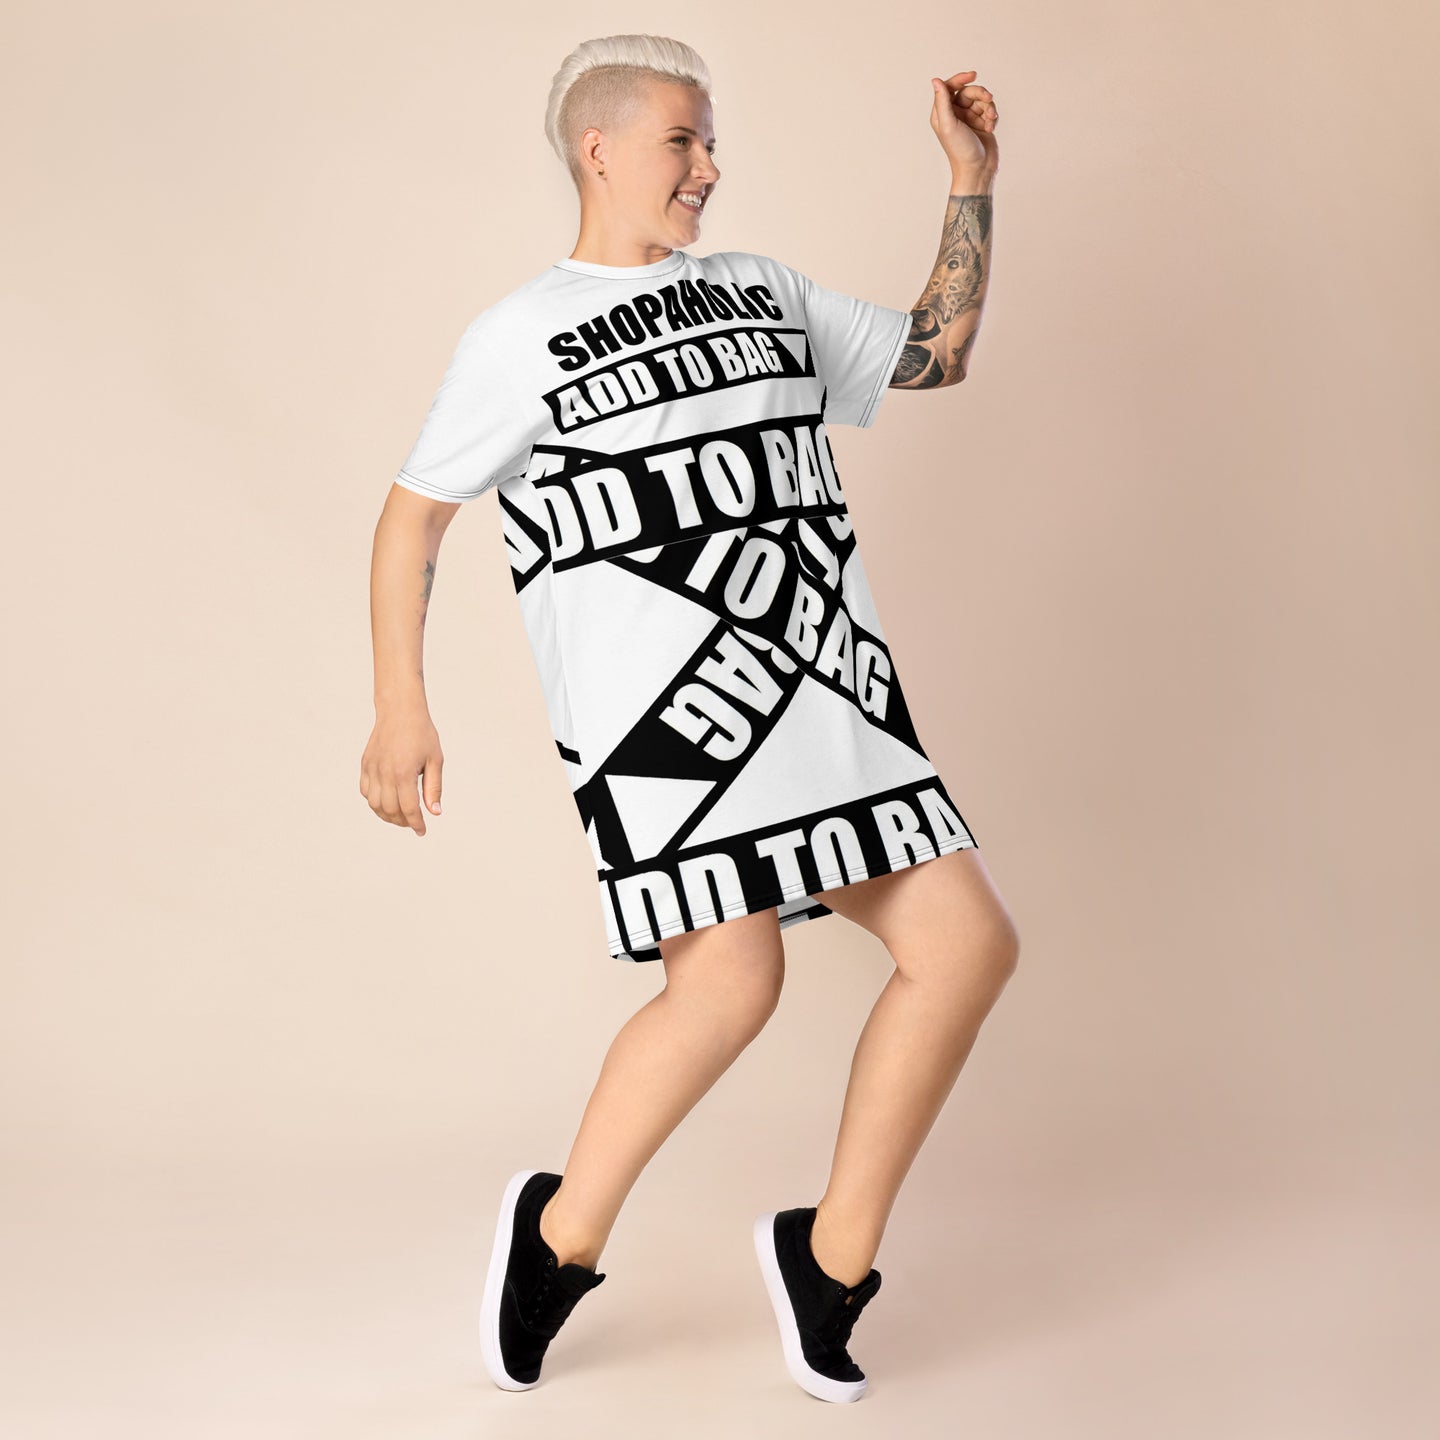 Shopaholic Add to Bag™ (Bandage) T-shirt Dress